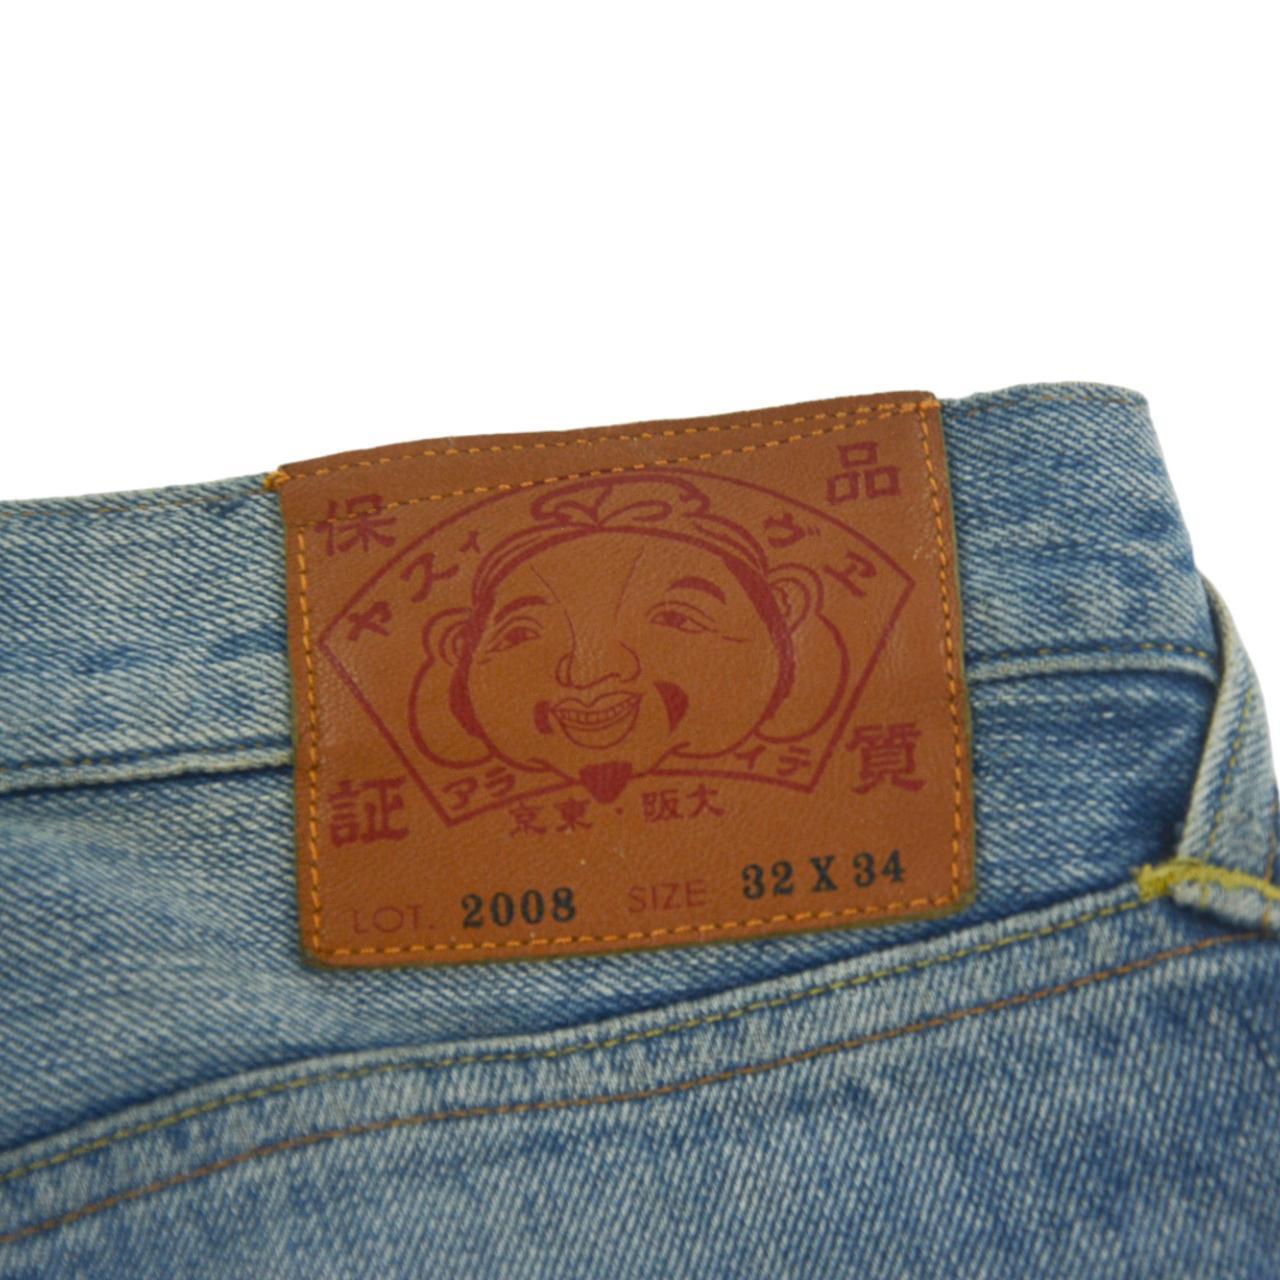 Vintage Evisu Double Gull Japanese Denim Jeans Size W34 - Known Source